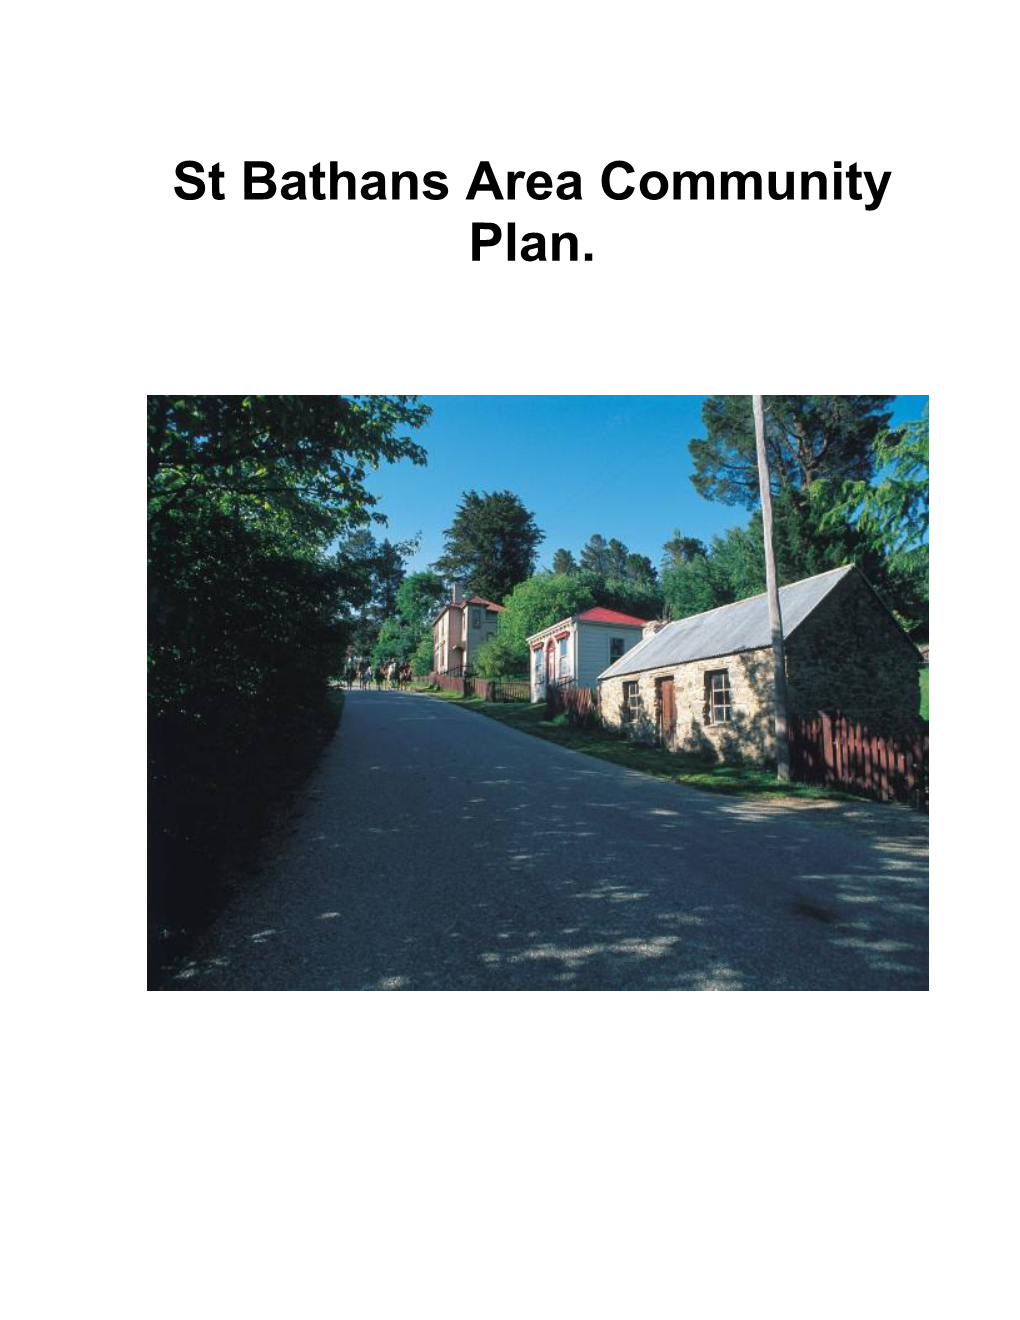 St Bathans Area Community Plan